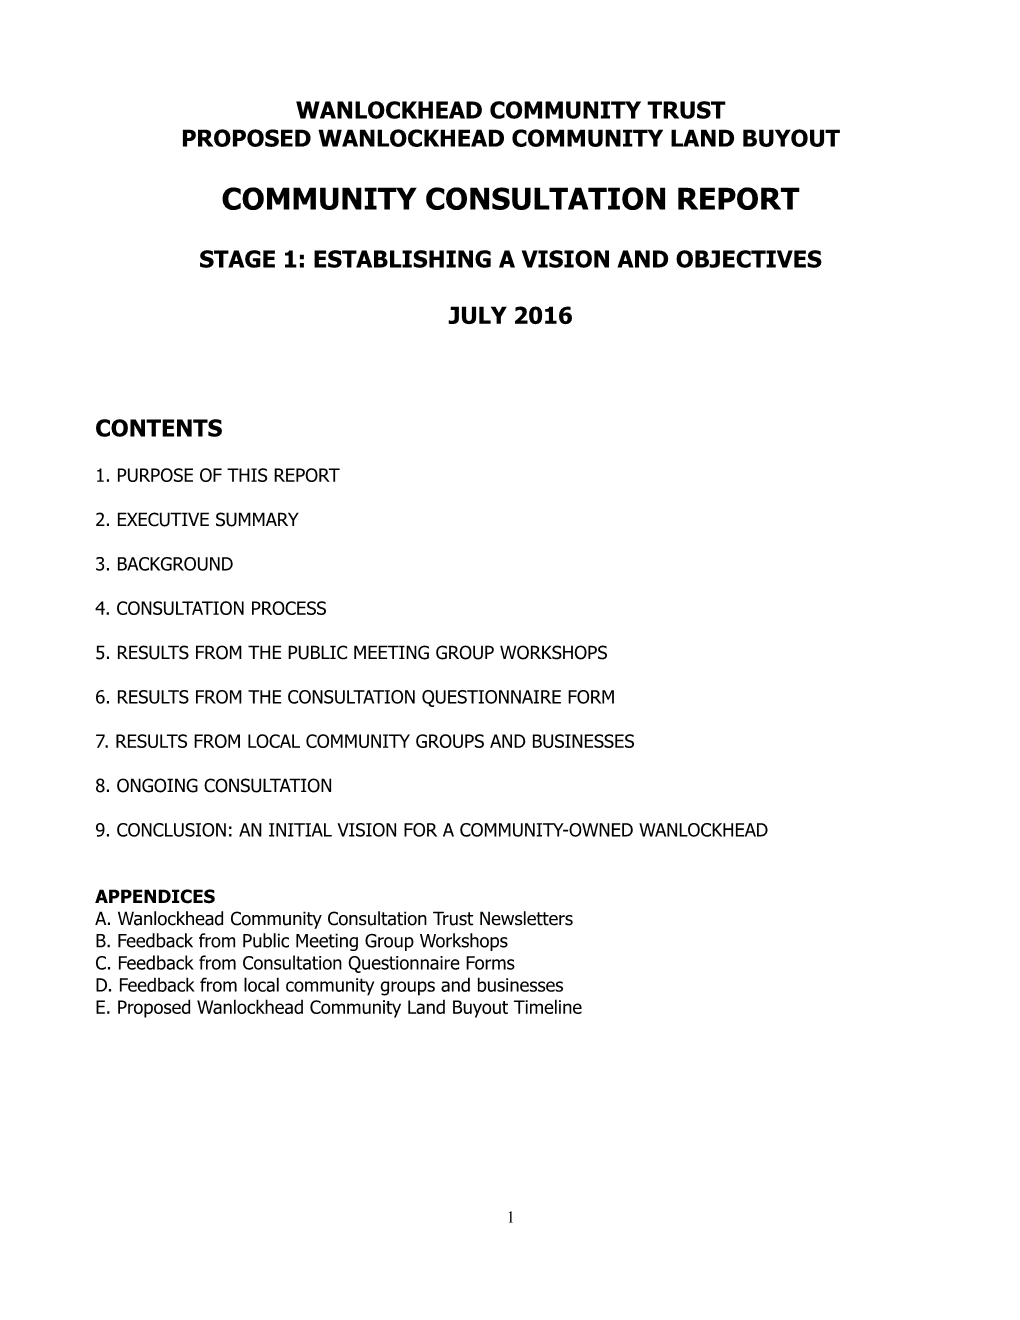 Wanlockhead Community Consultation Report, a January 2016 Public Meeting Was Organised